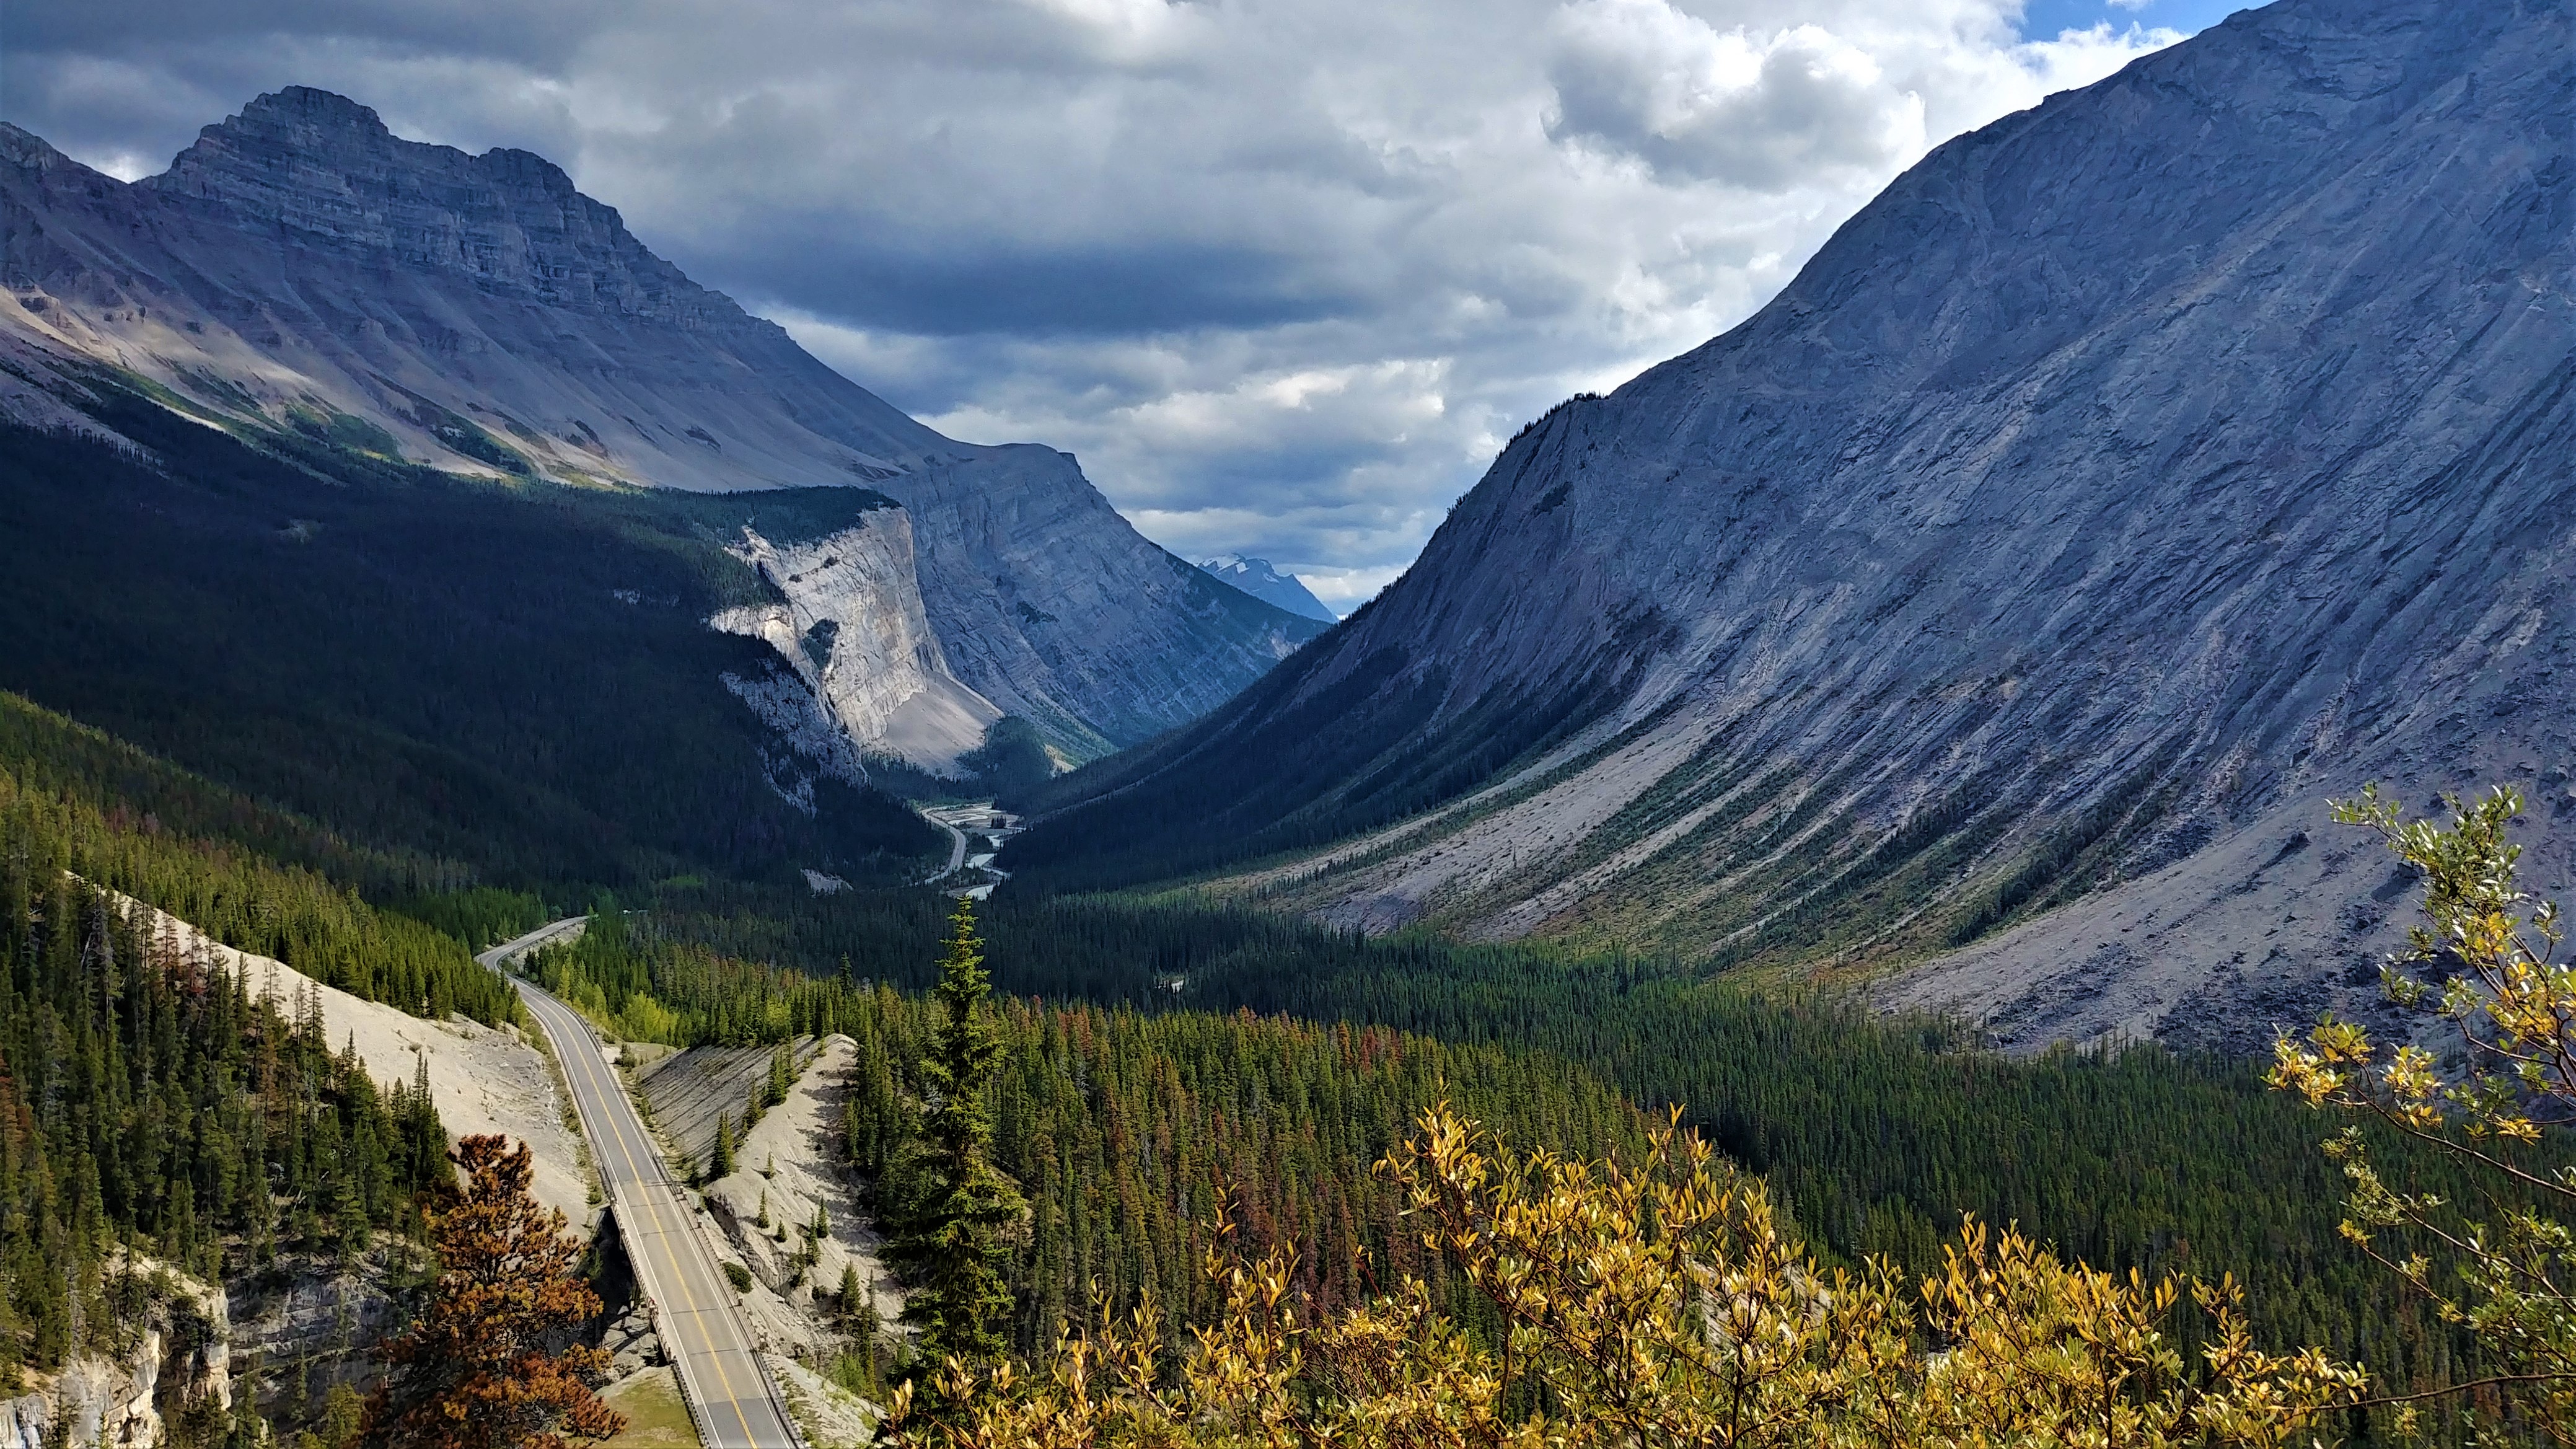 Banff Jasper promenade des glaciers icefield parkway muraille en pleurs weeping wall road-trip rocheuses canada